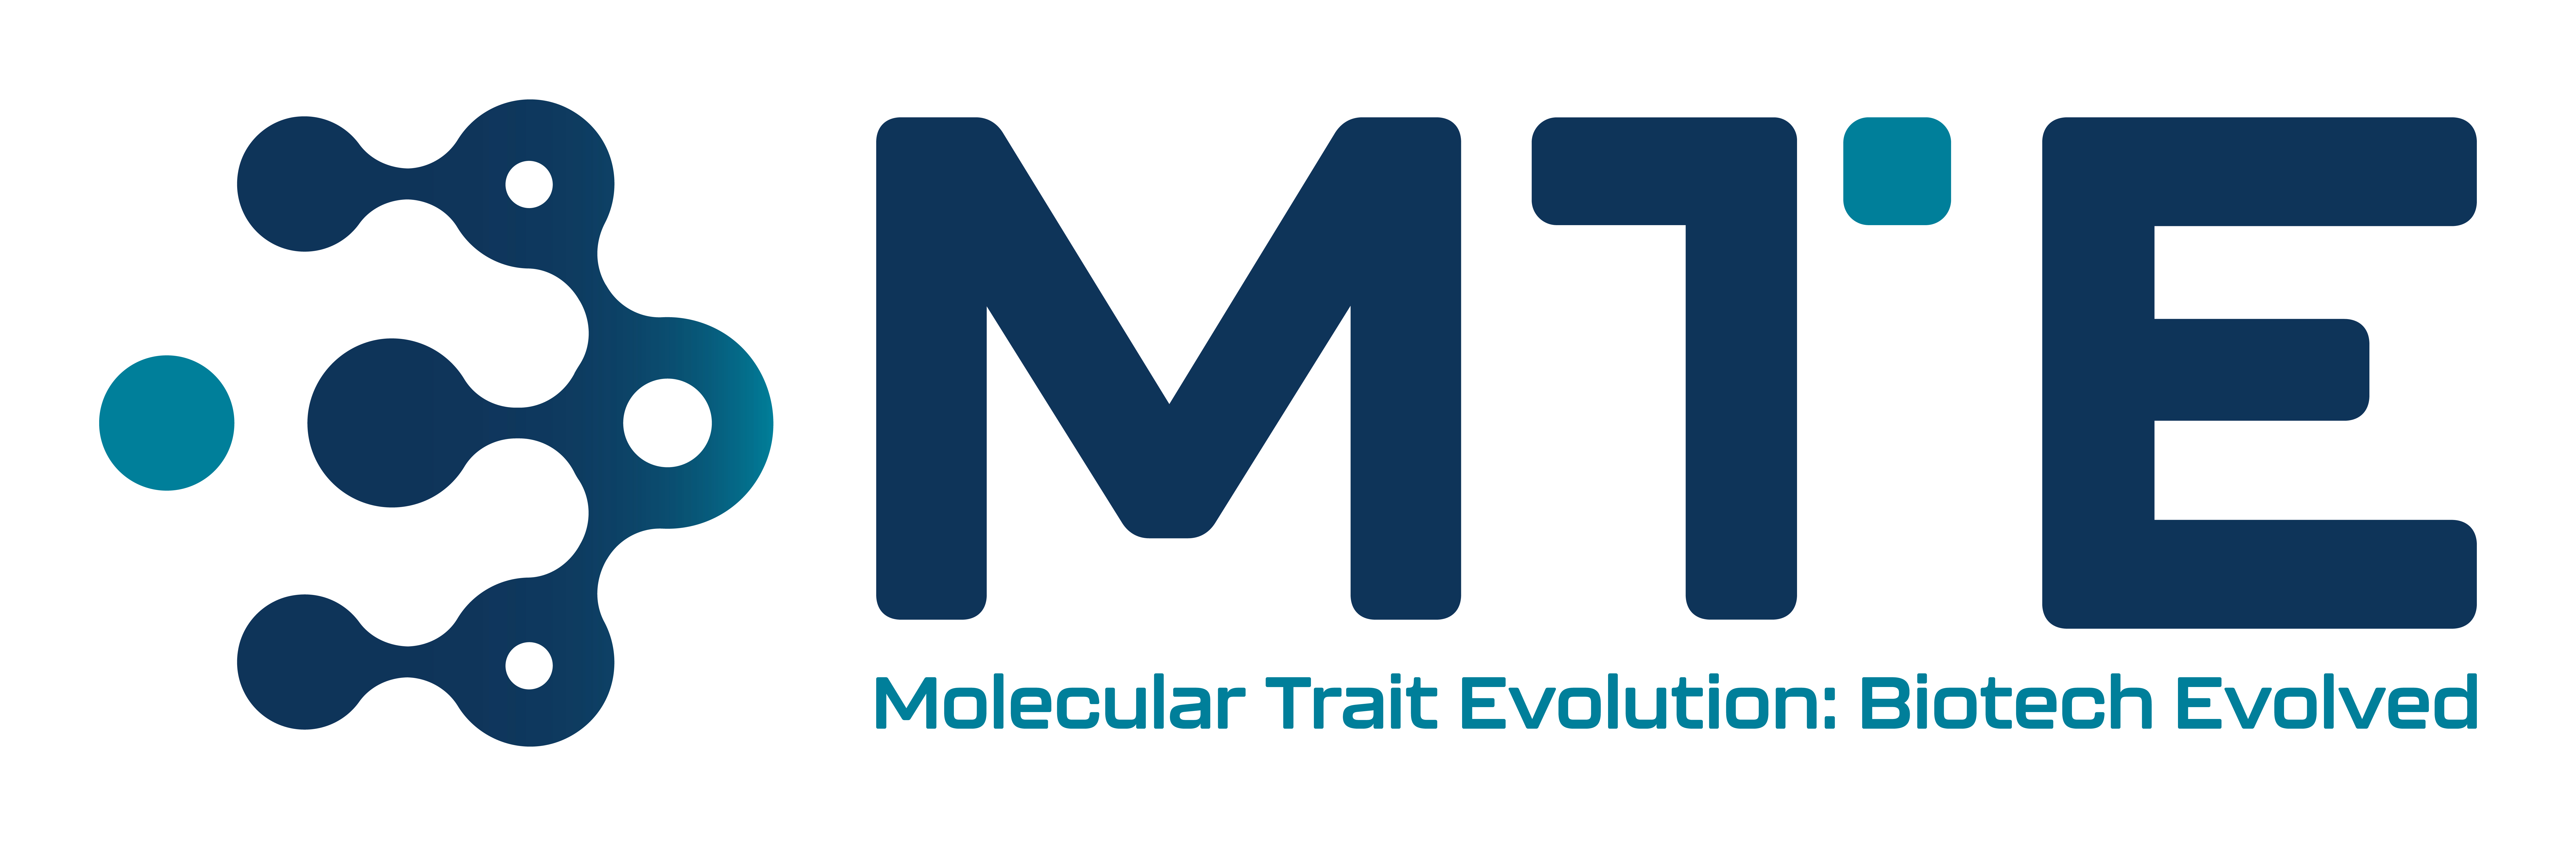 Molecular Trait Evolution logo